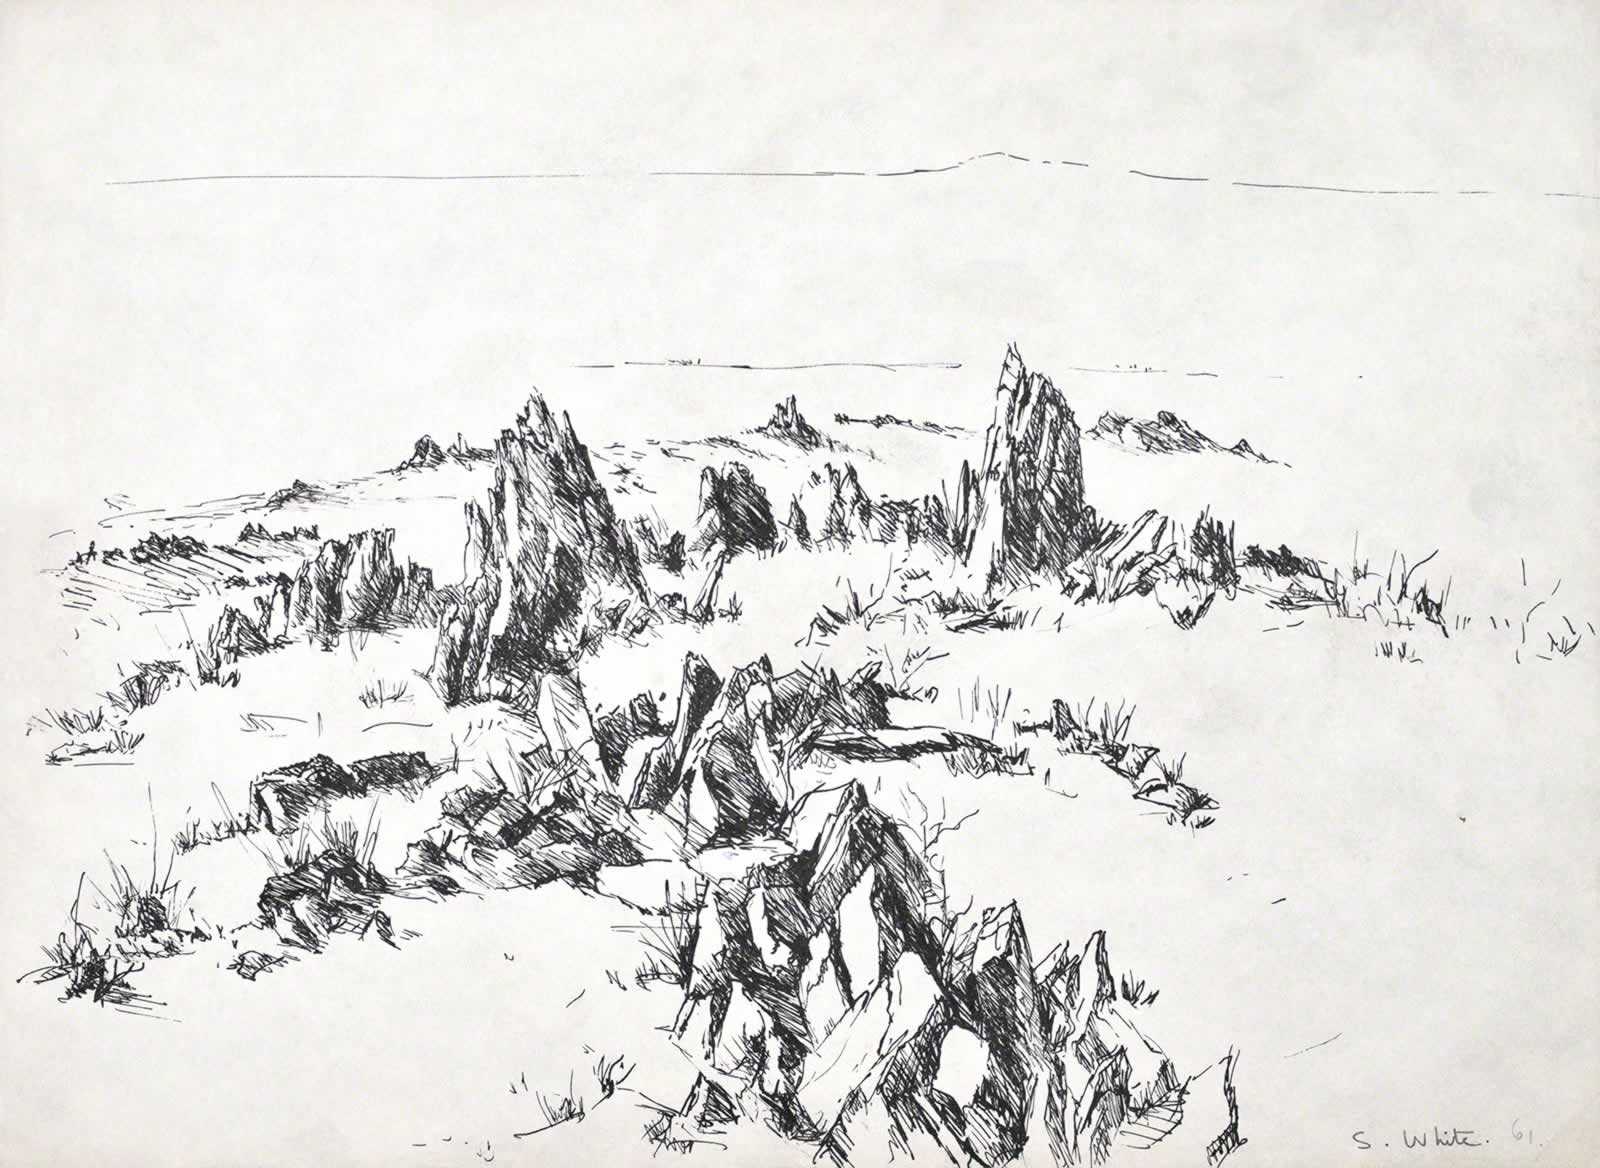 Zig-zag Rocky Ridge, Broken Hill by Susan Dorothea White